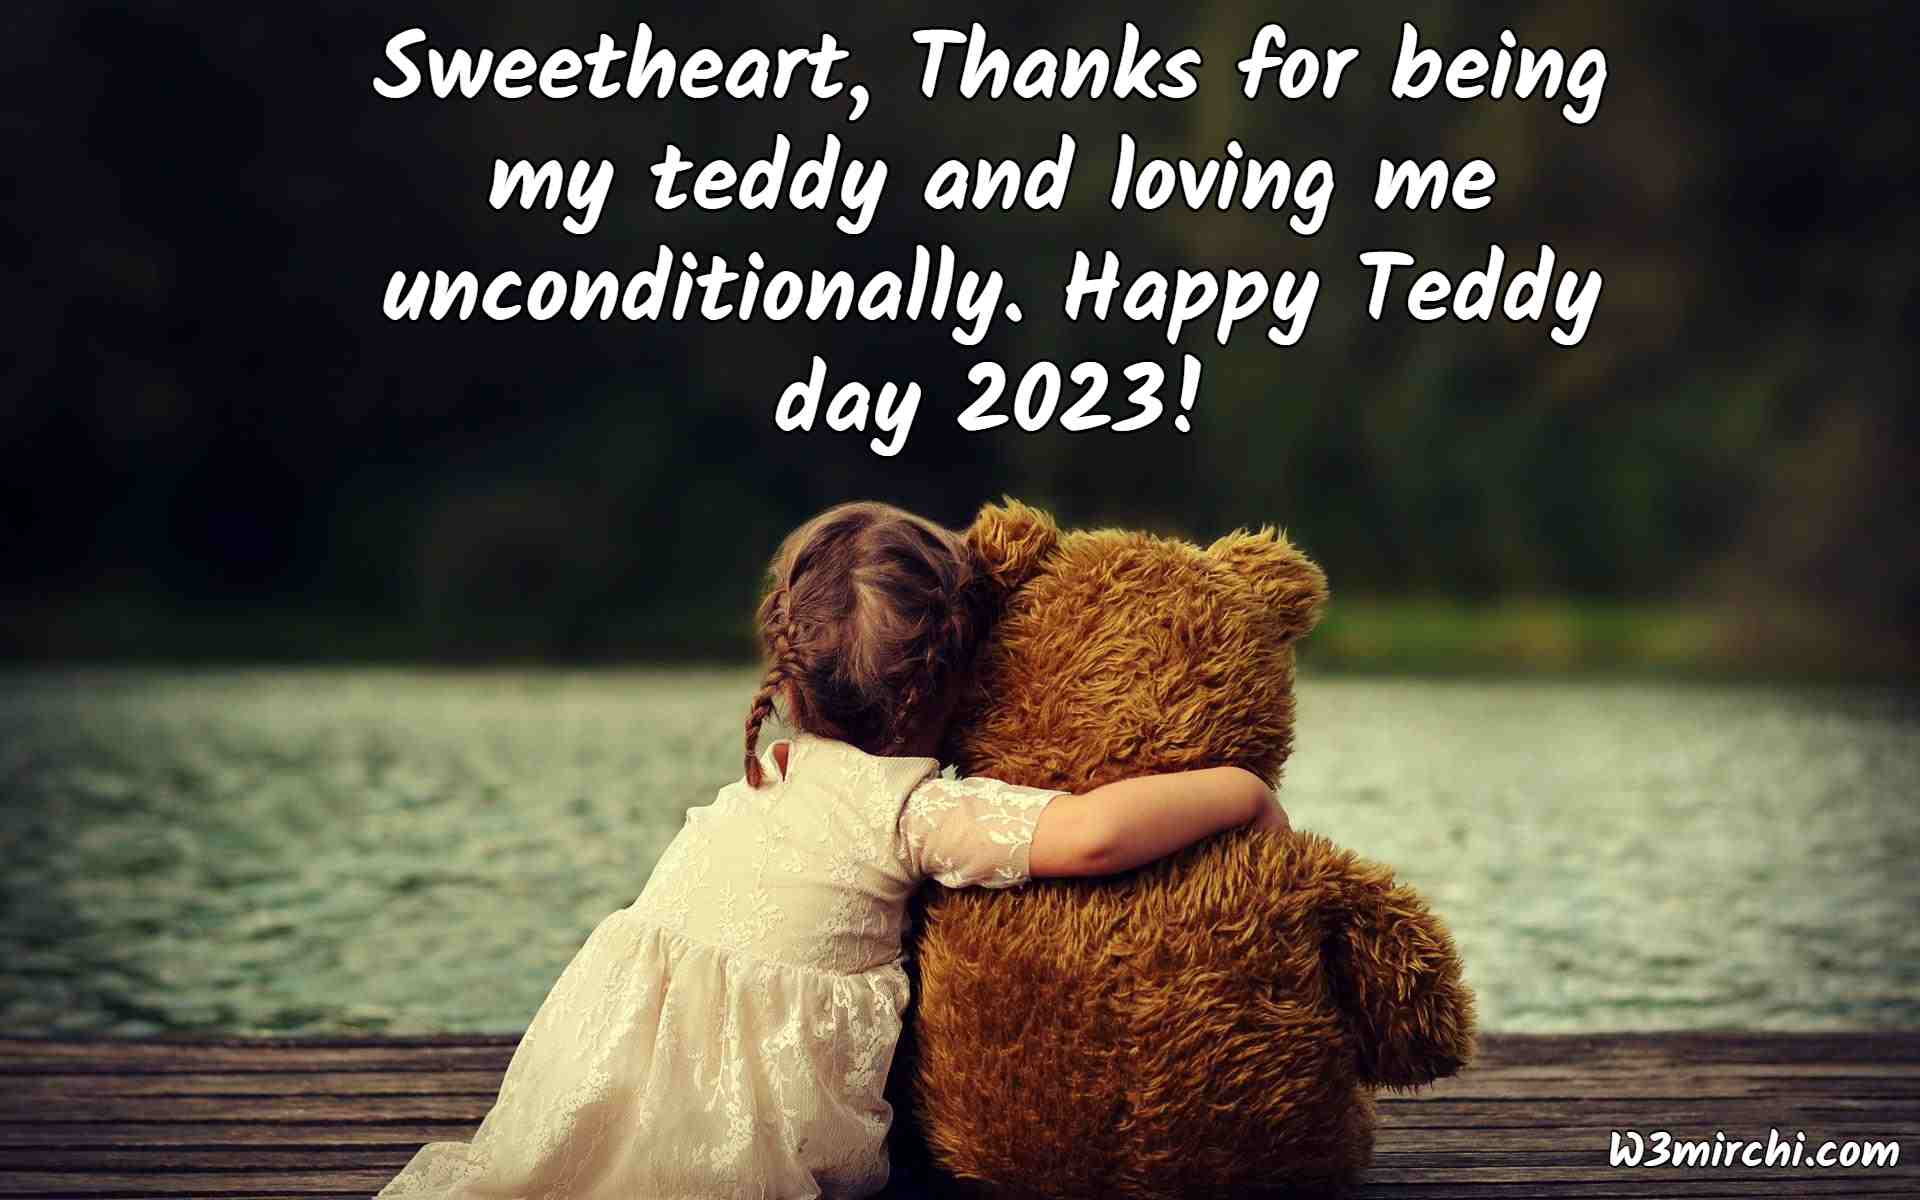 Happy Teddy day 2023!